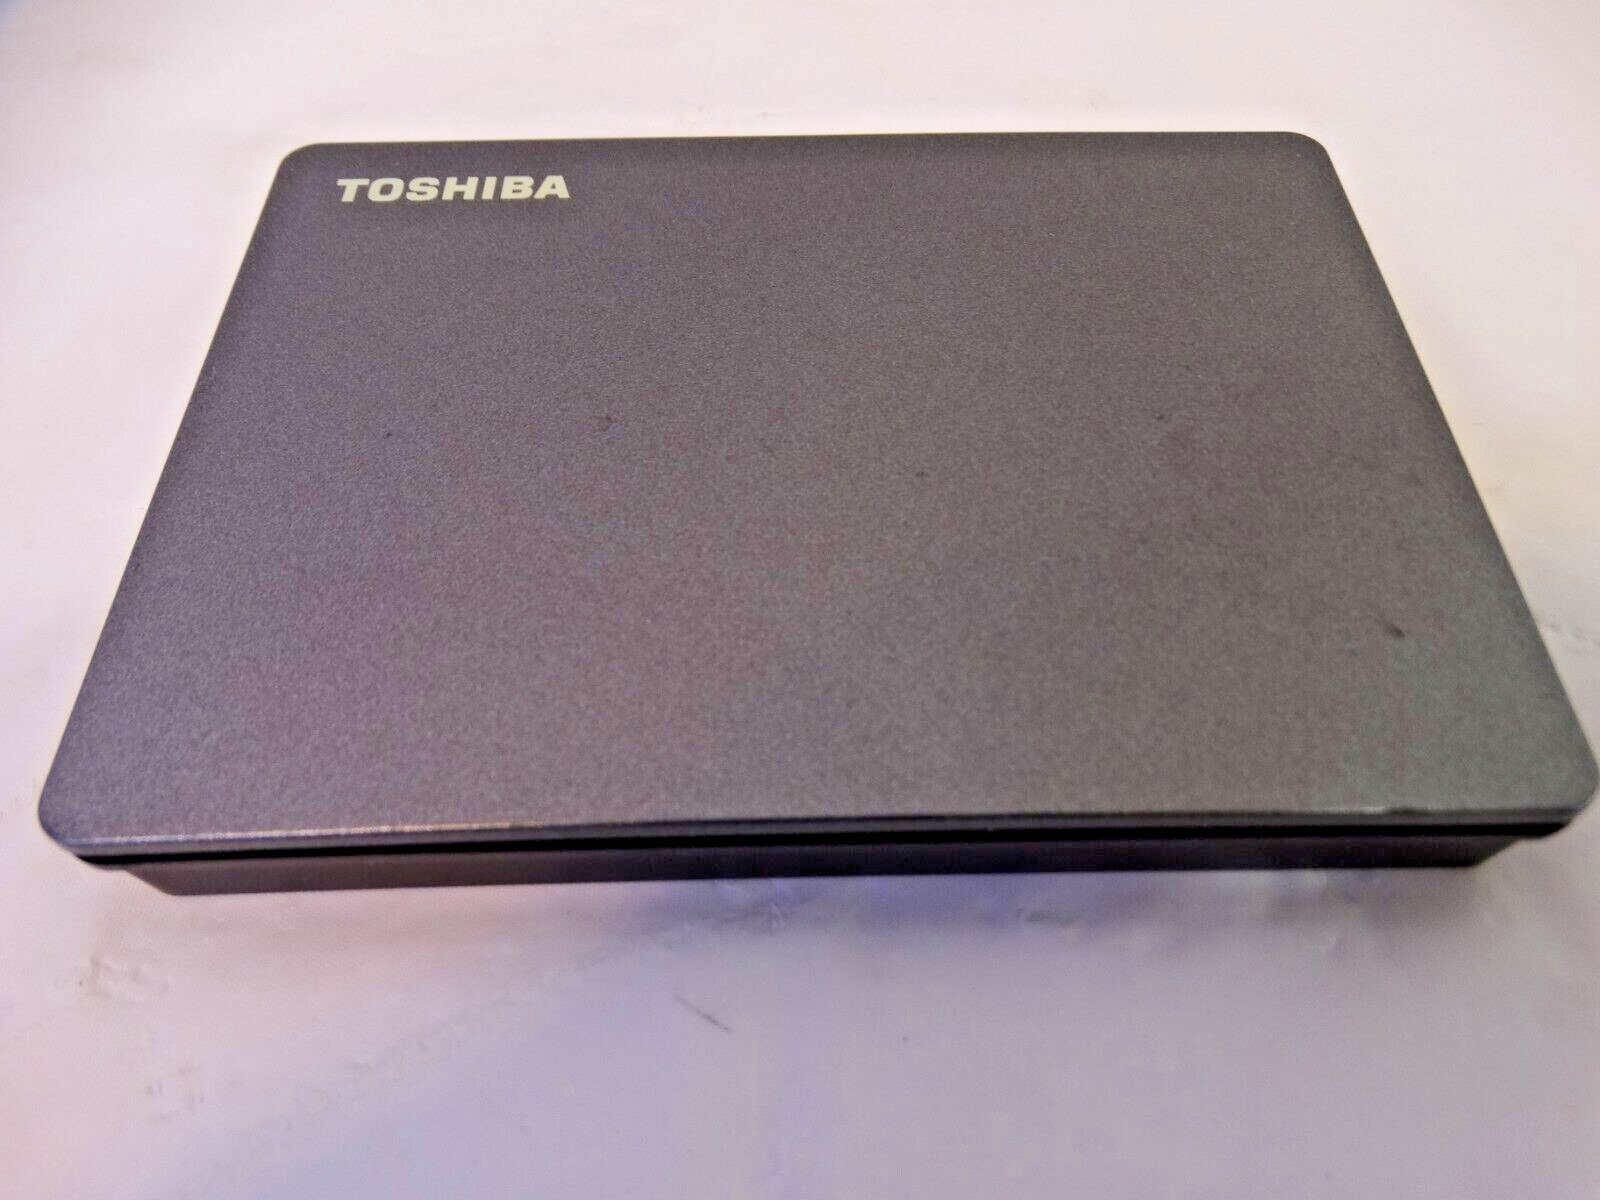 Toshiba Portable Storage Drive, 2TB Model DTX120 PN: HDTX120XK3AA